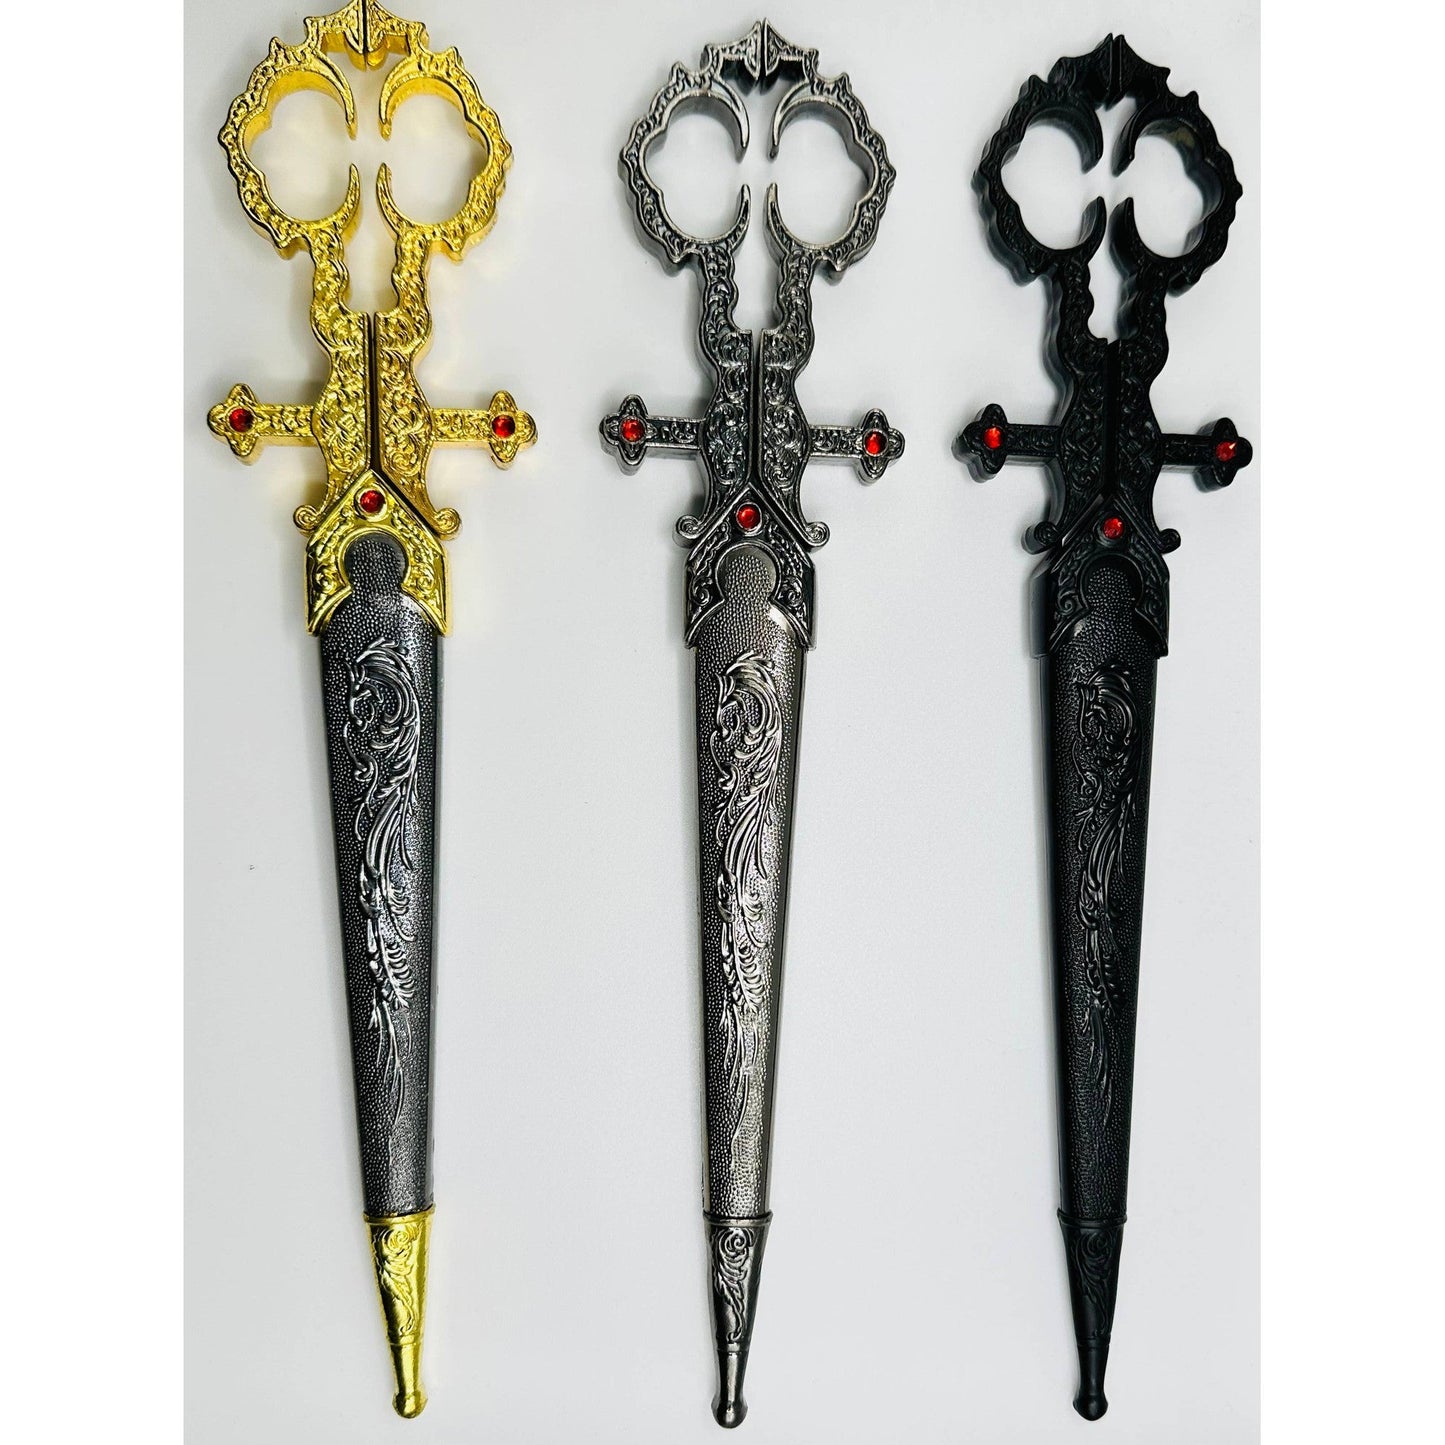 Silver Renaissance Scissors with Scissors Holder | Vintage Sword-like